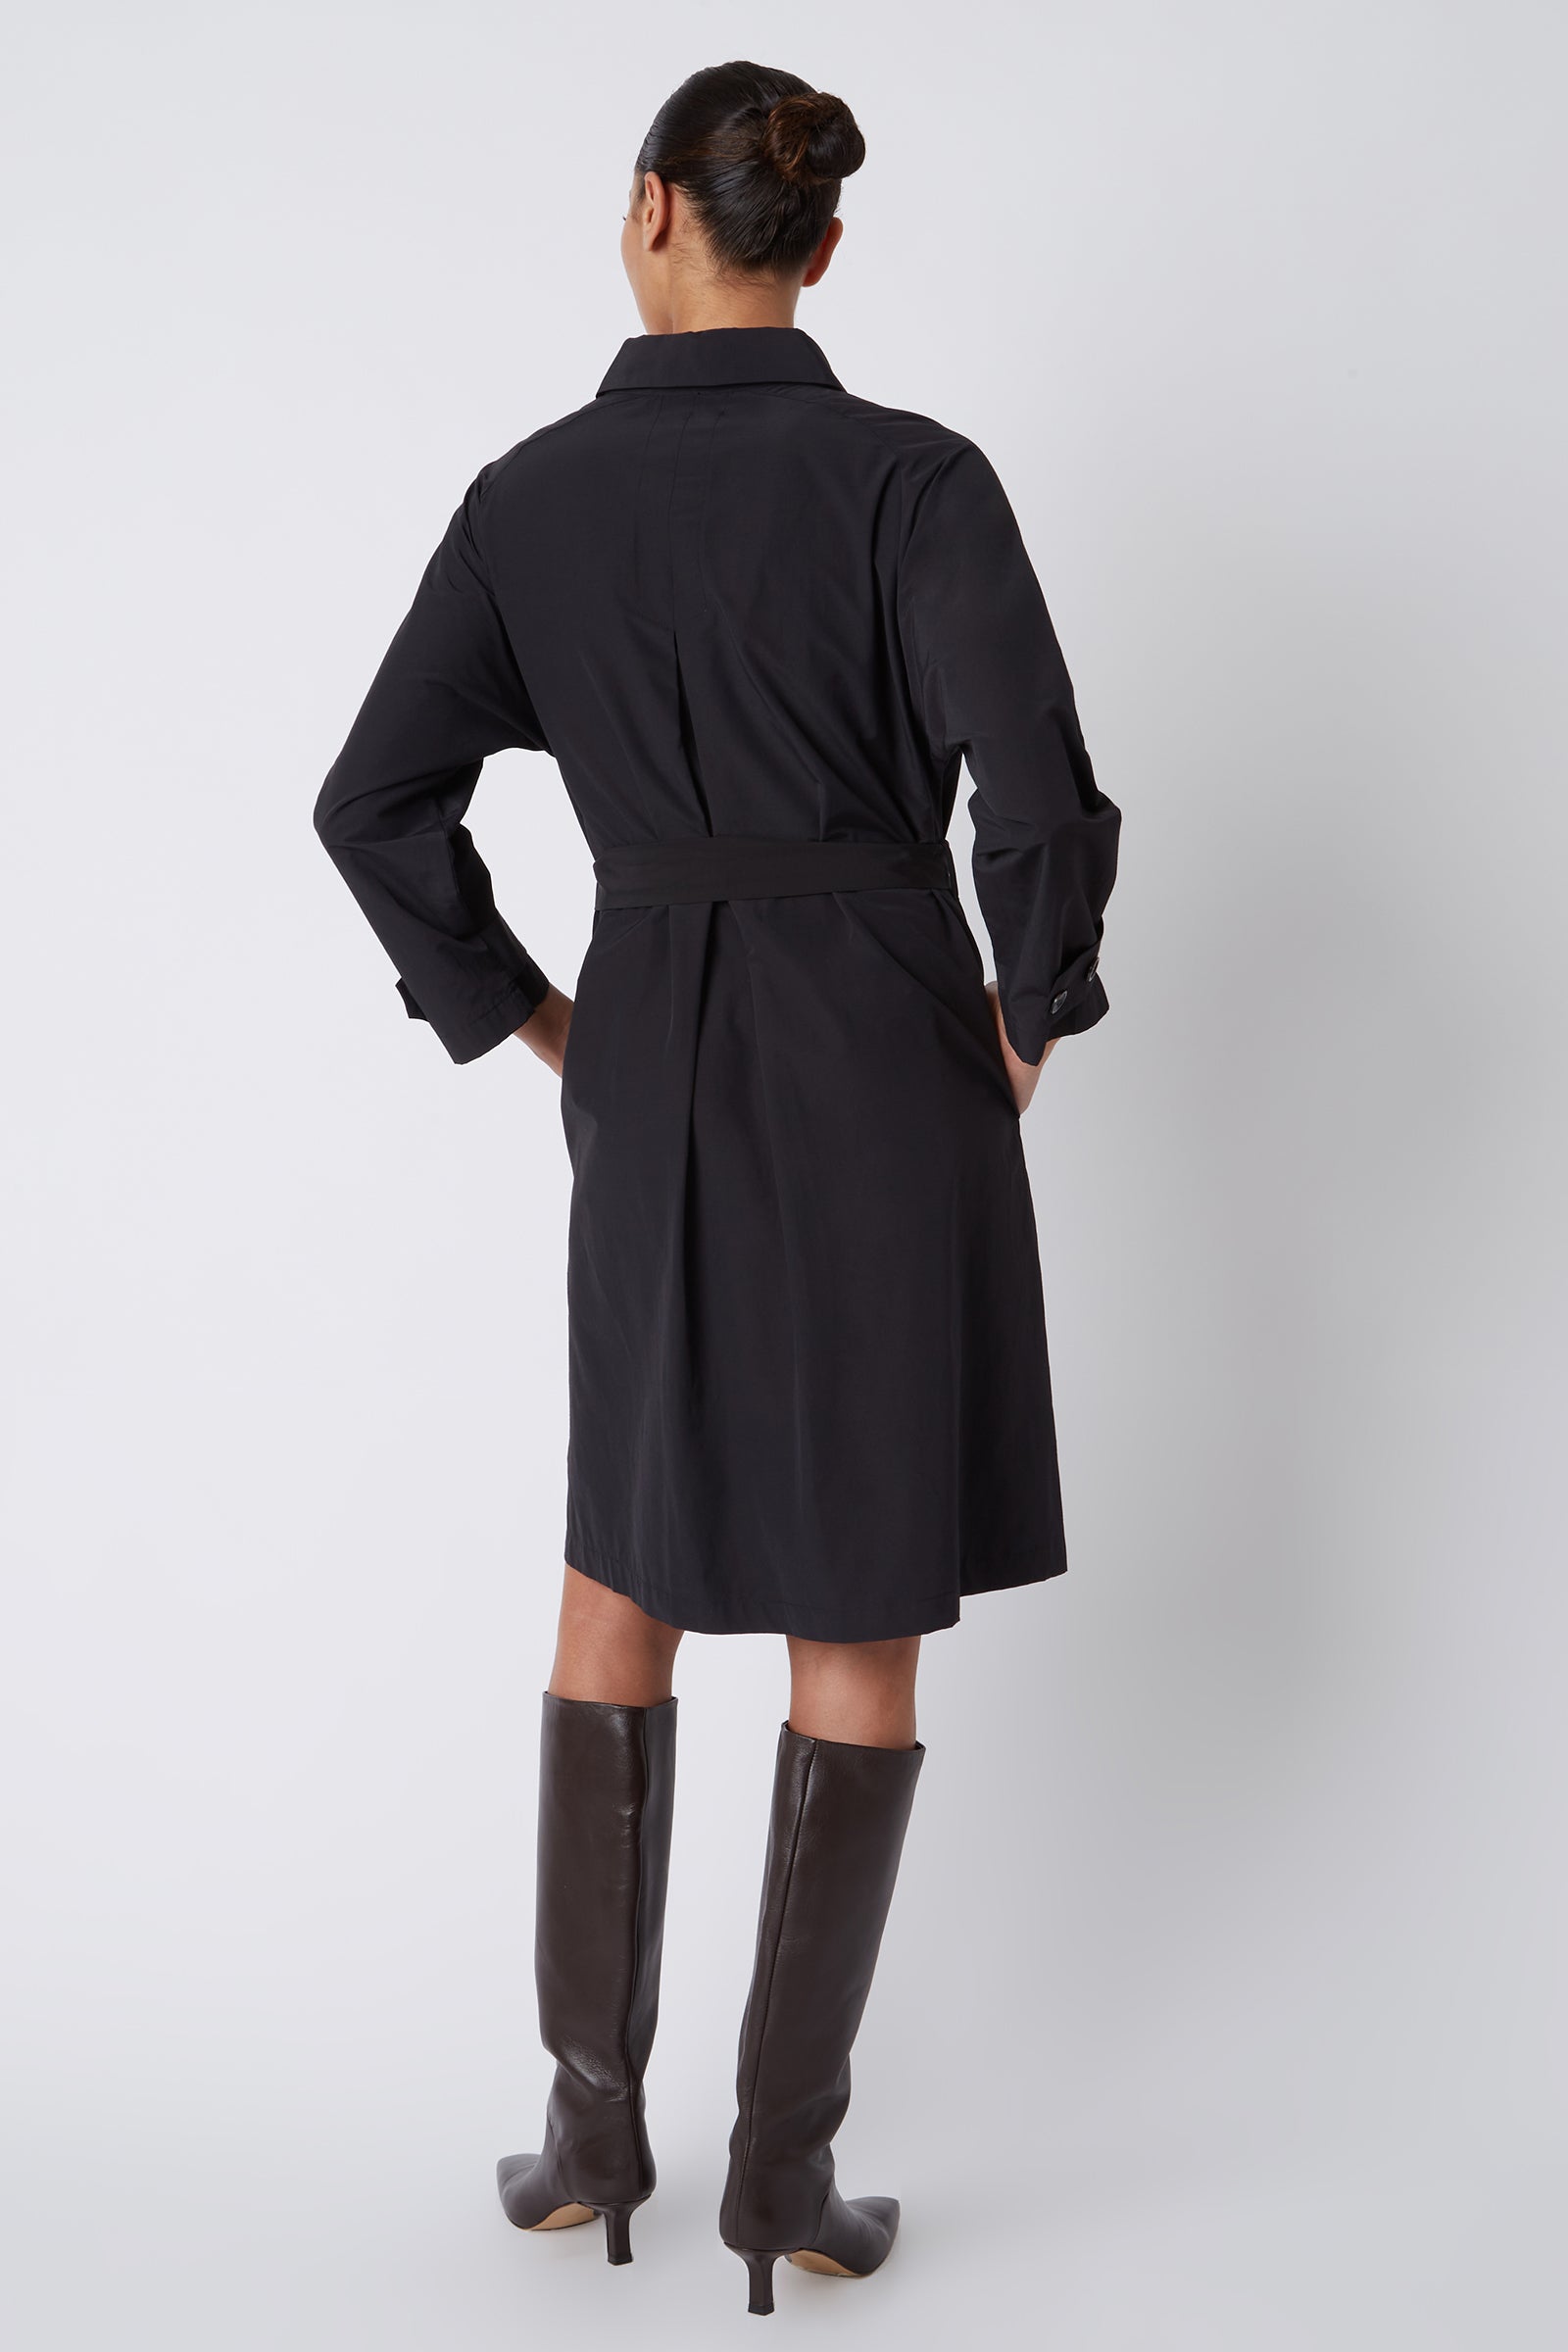 Kal Rieman Bonnie Pleat Back Dress in Black Italian Broadcloth on Model Full Back View